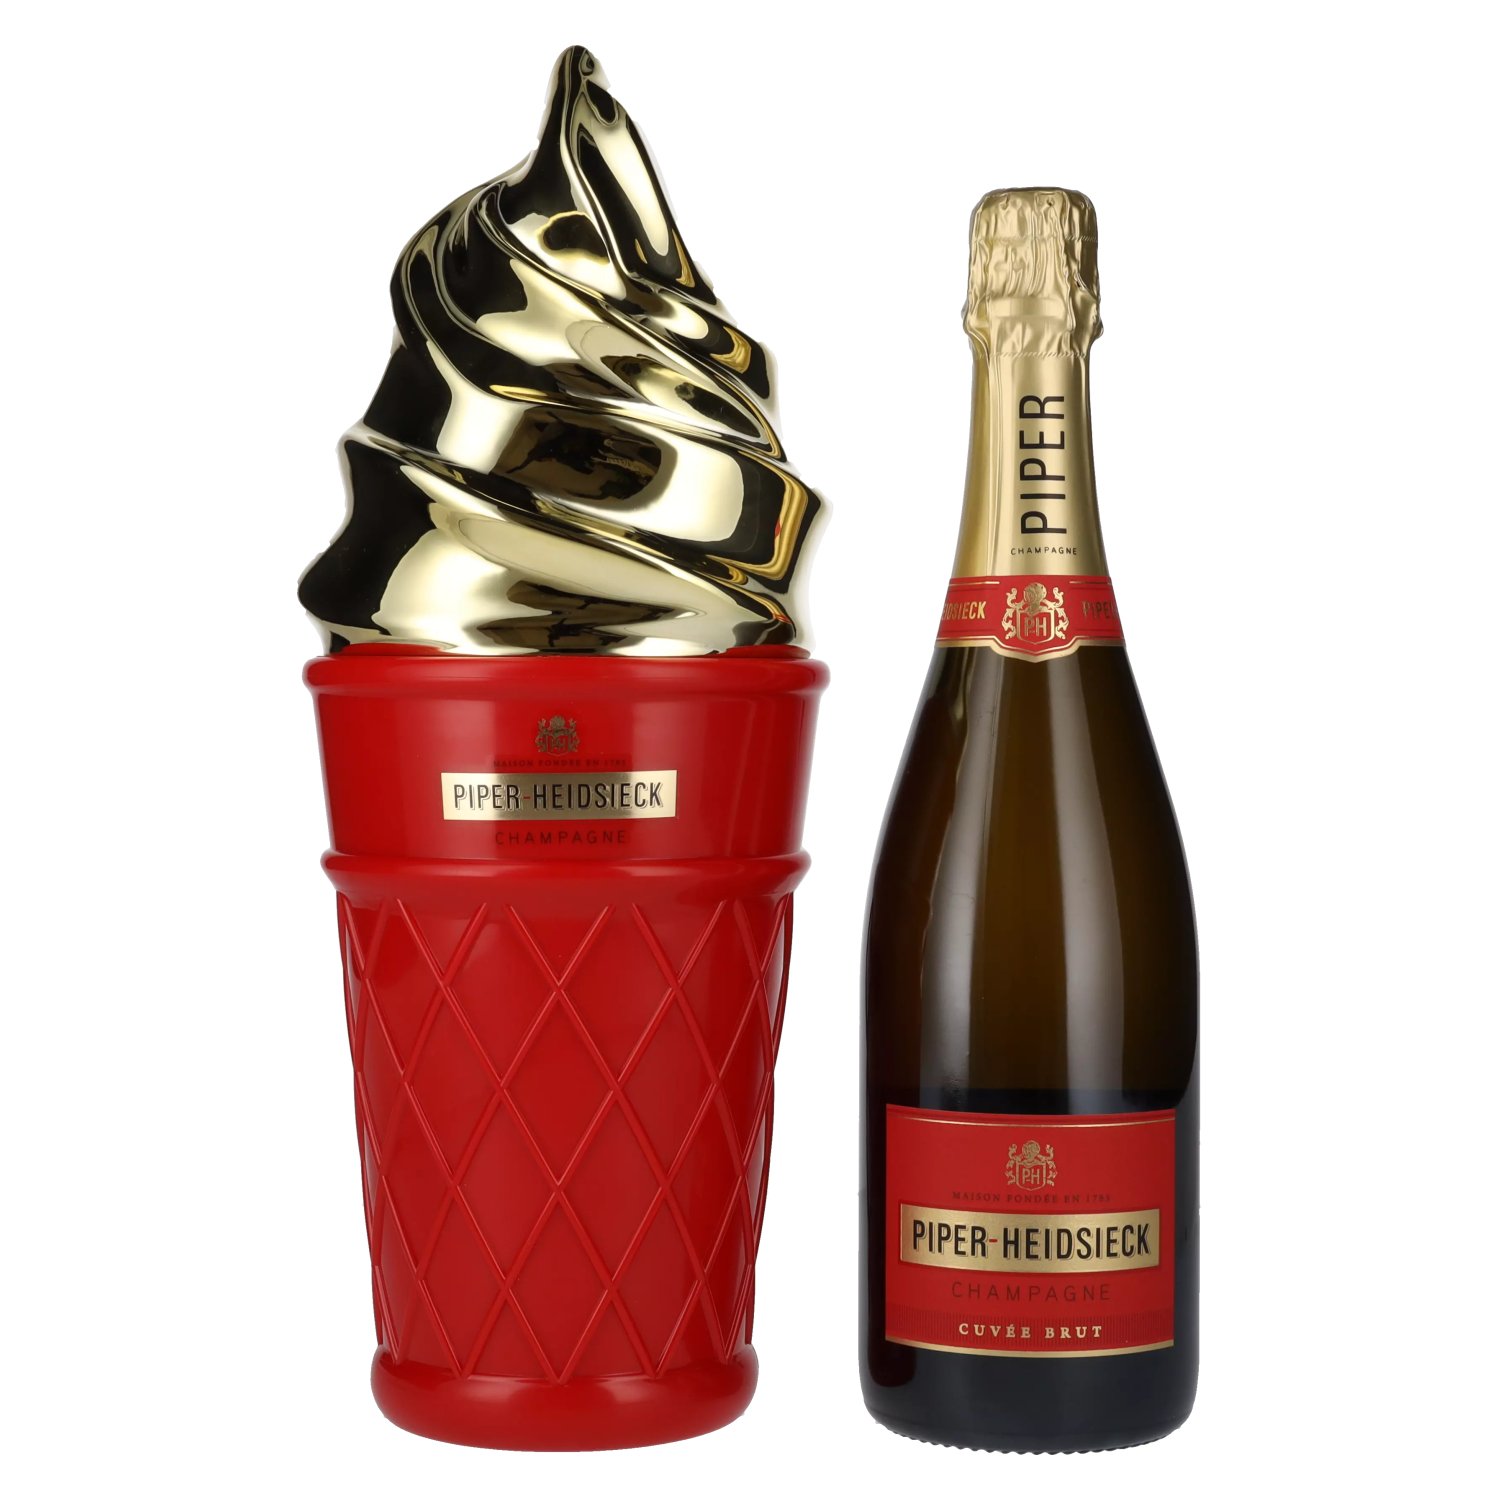 CUVÉE Edition Champagne Ice Vol. Piper-Heidsieck 12% in Giftbox 0,75l Cream BRUT